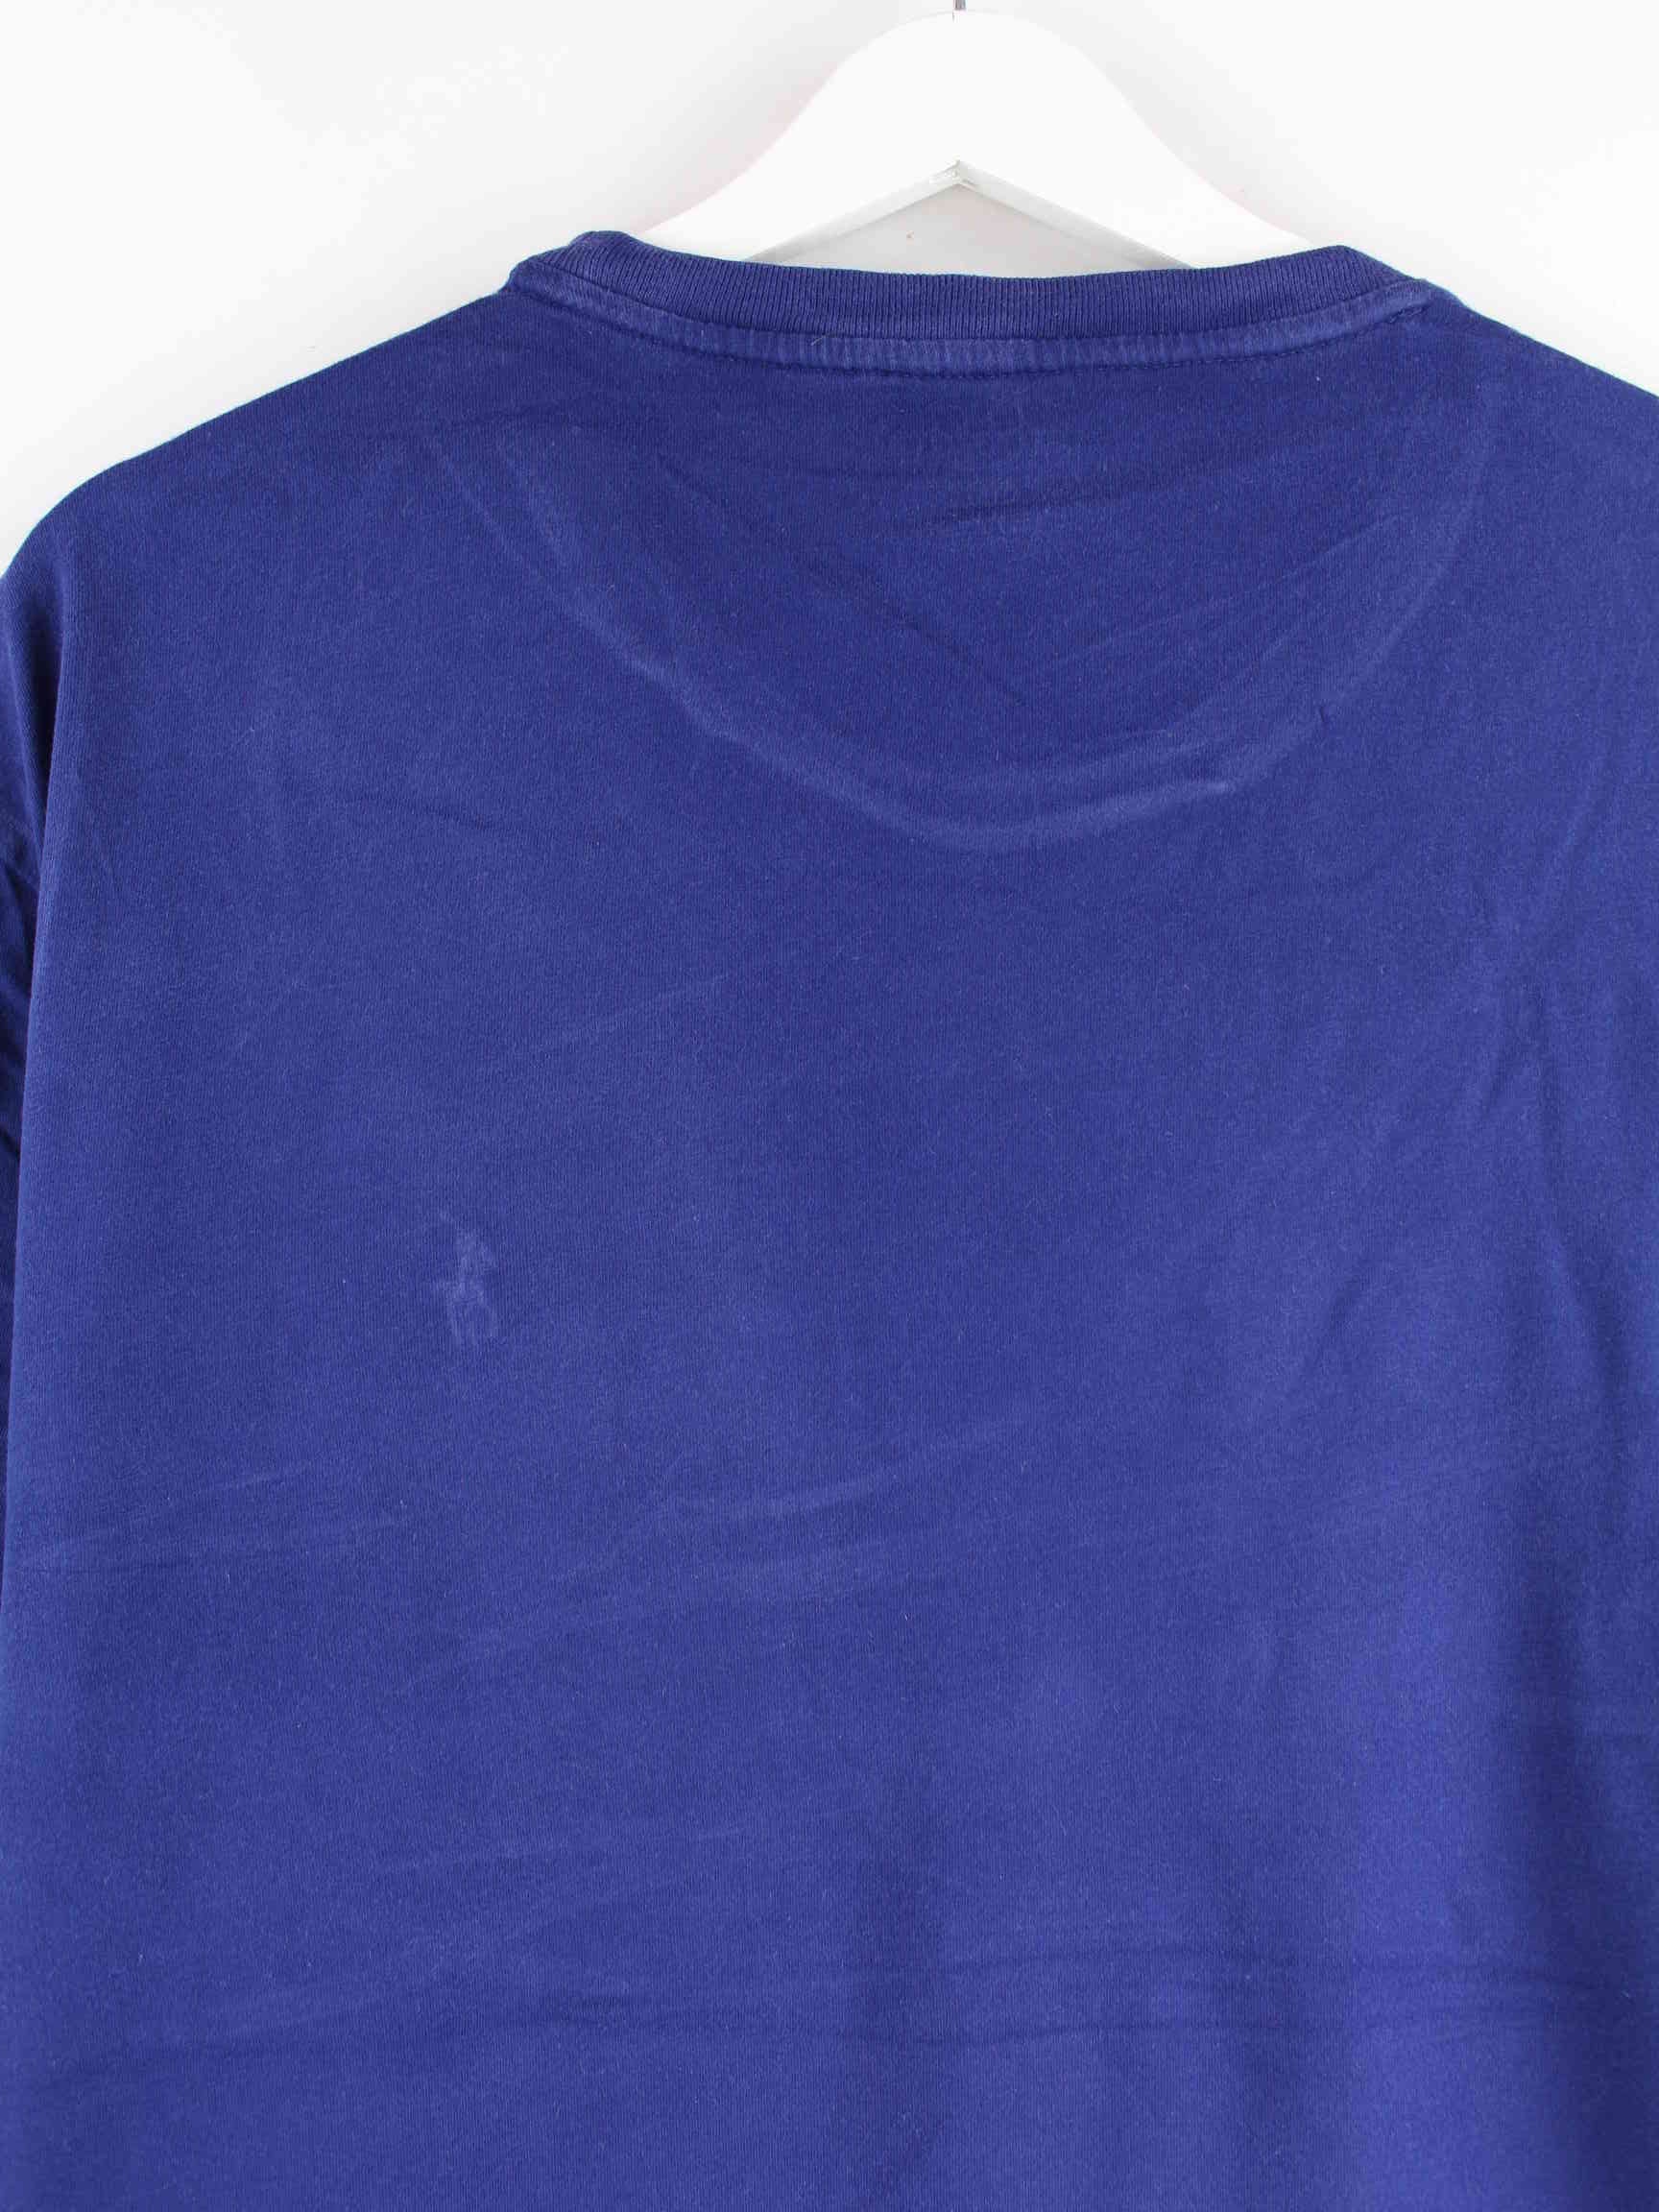 Ralph Lauren Basic T-Shirt Blau L (detail image 3)